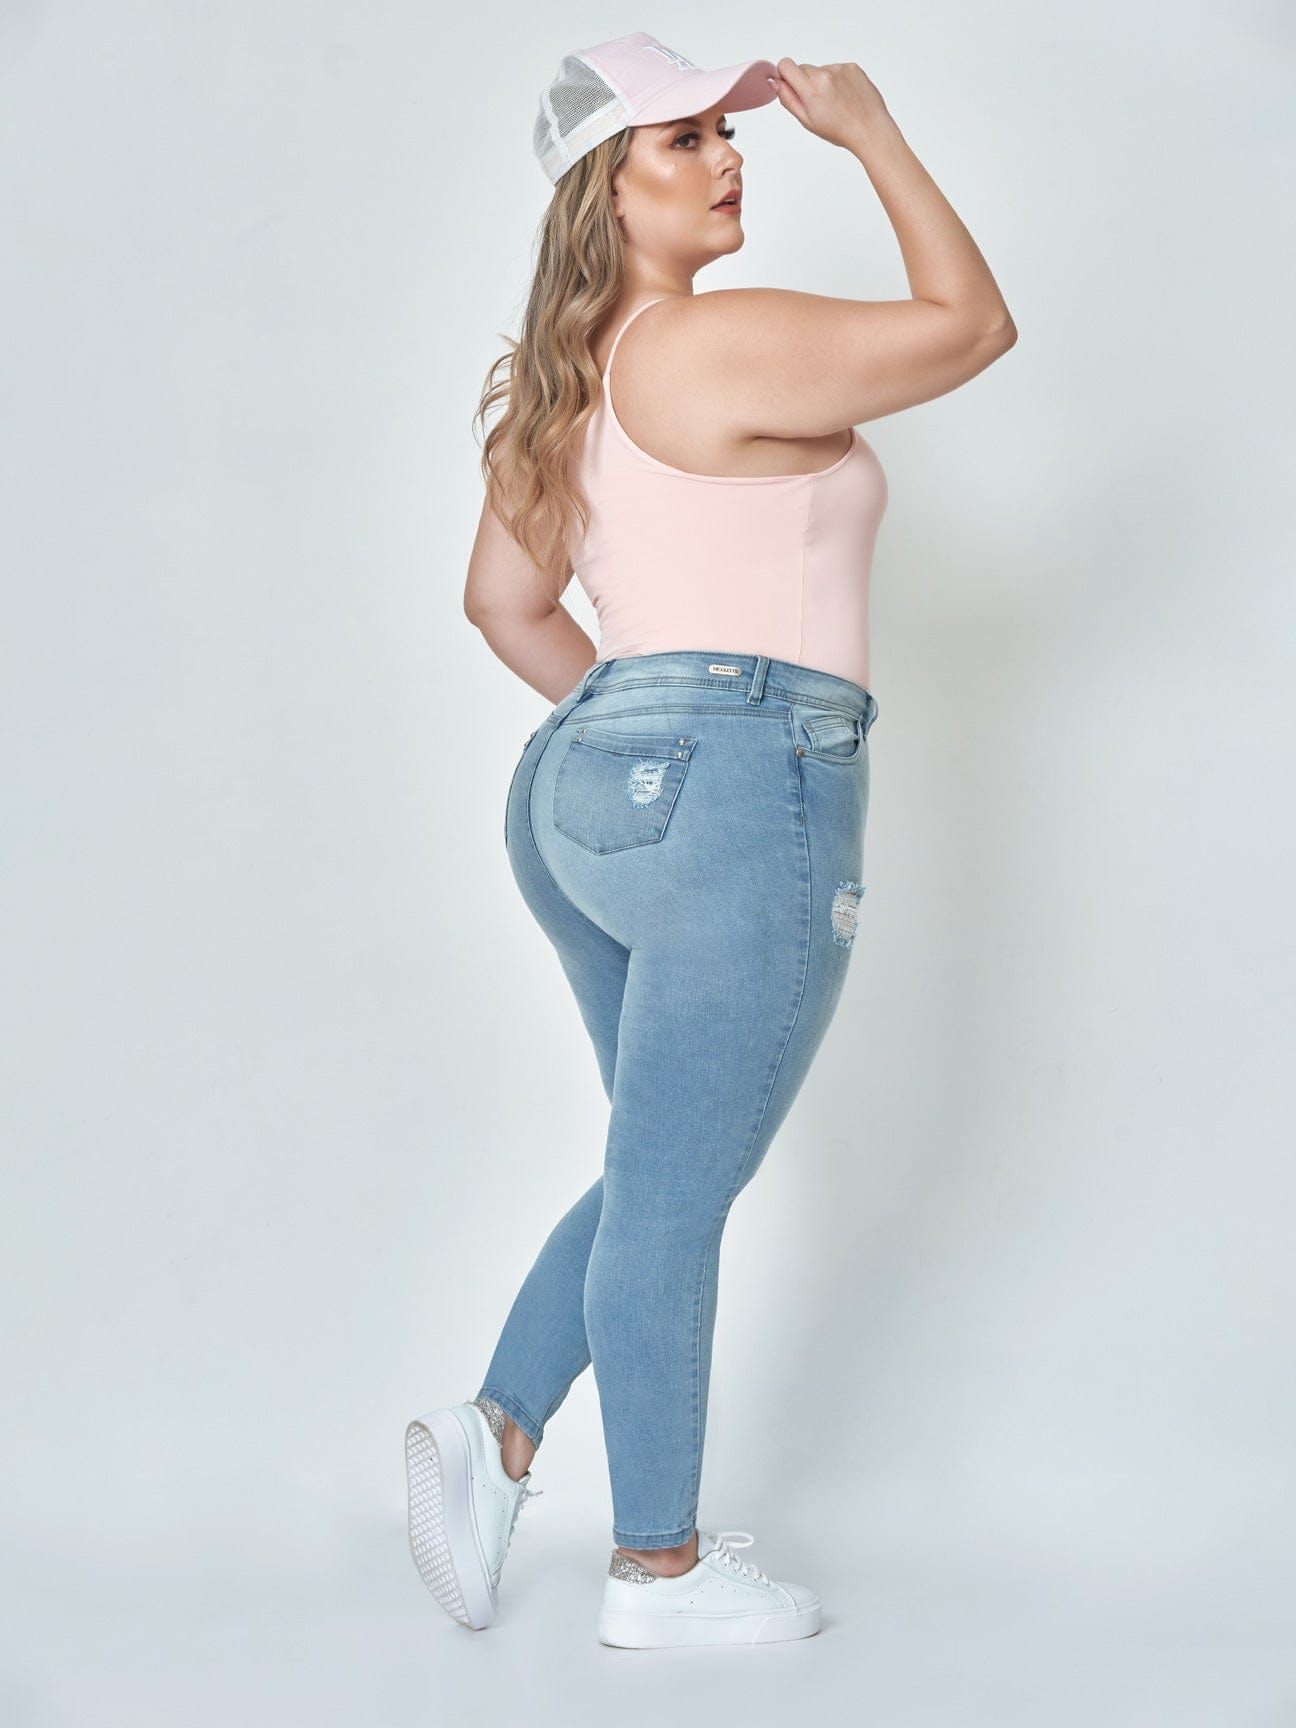 Hannah Butt Lift Stretch Skinny Jeans full body side back view plus sized model.